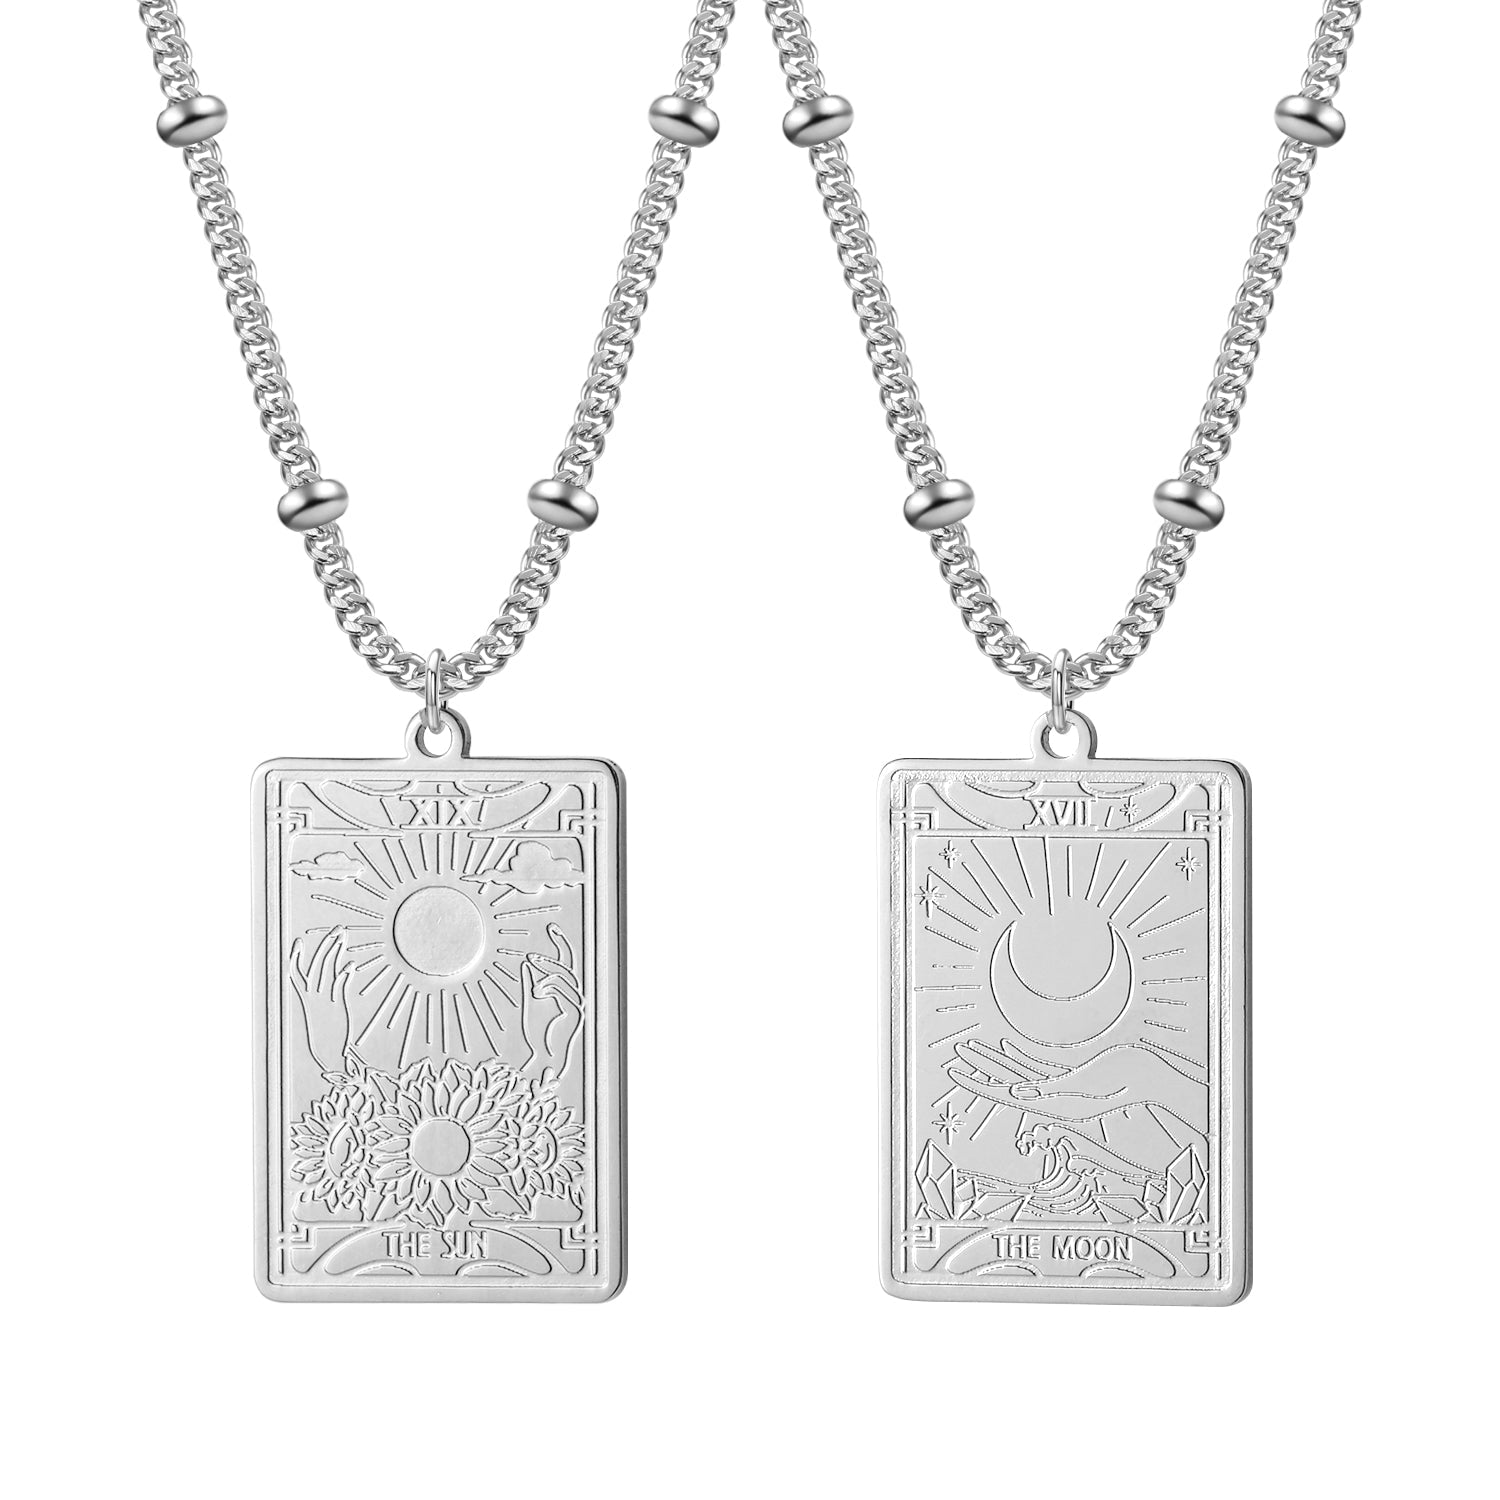 Tarot Card Necklace | Spiritual Jewelry - Julri Box